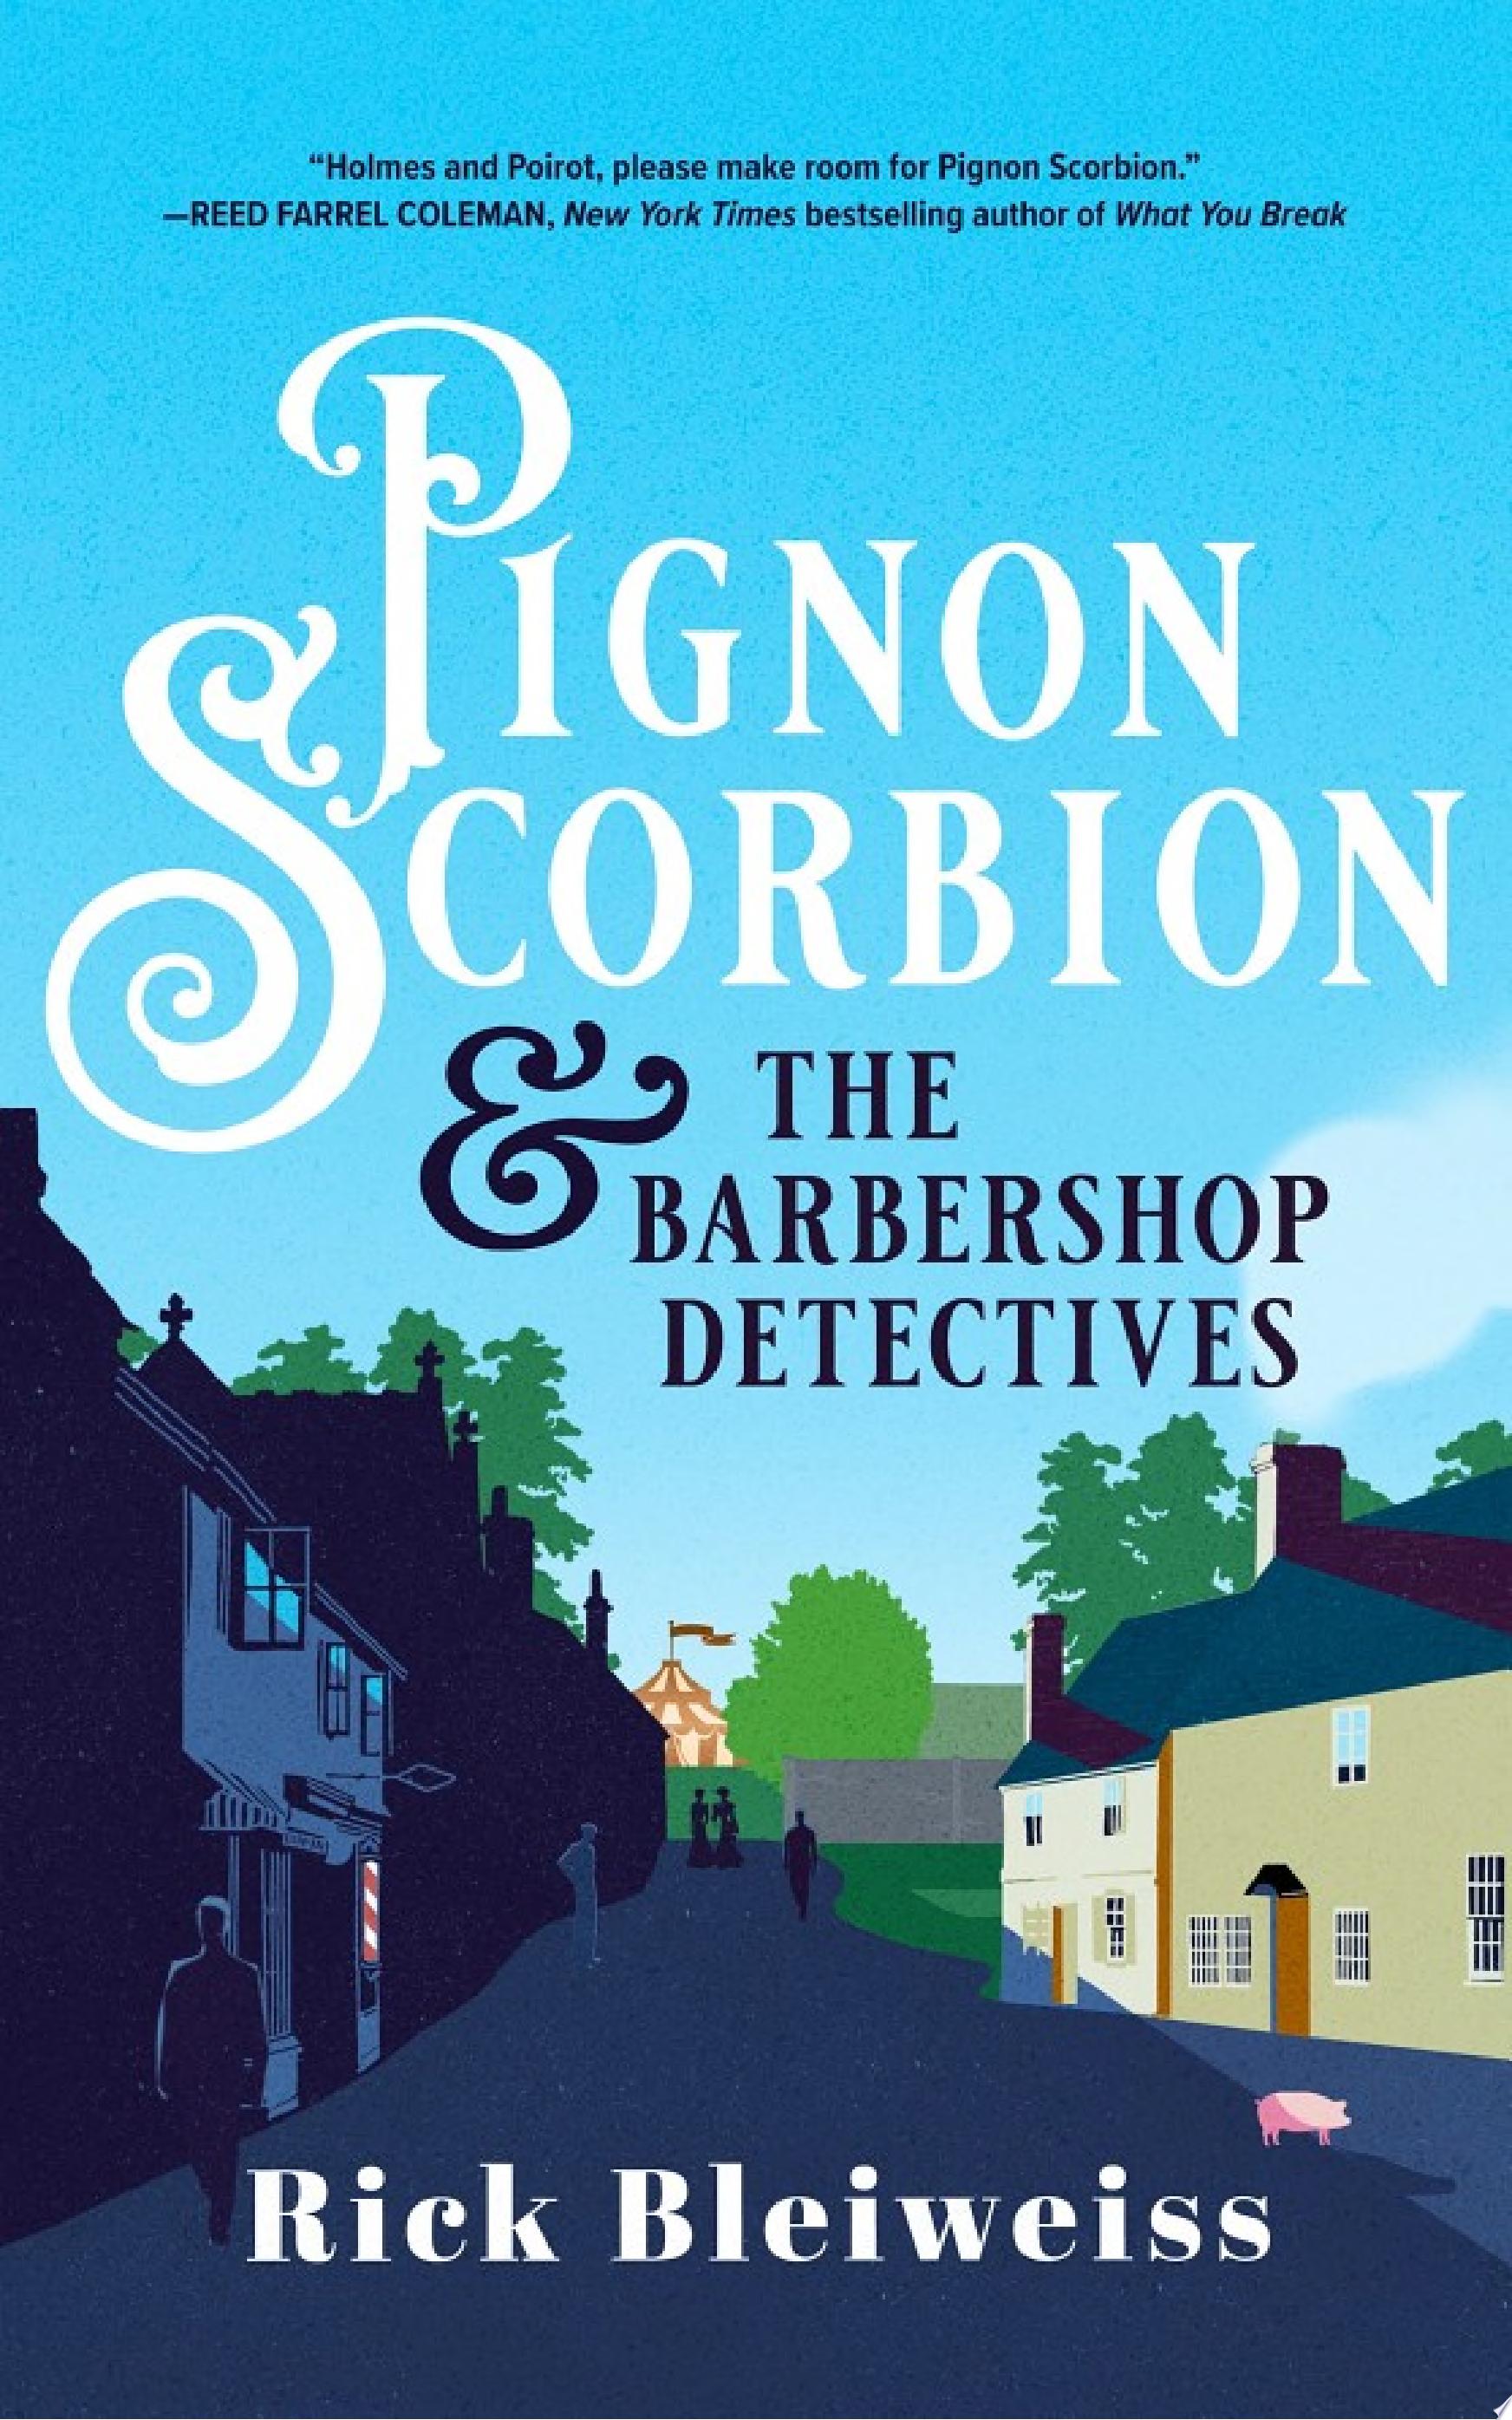 Image for "Pignon Scorbion & the Barbershop Detectives"